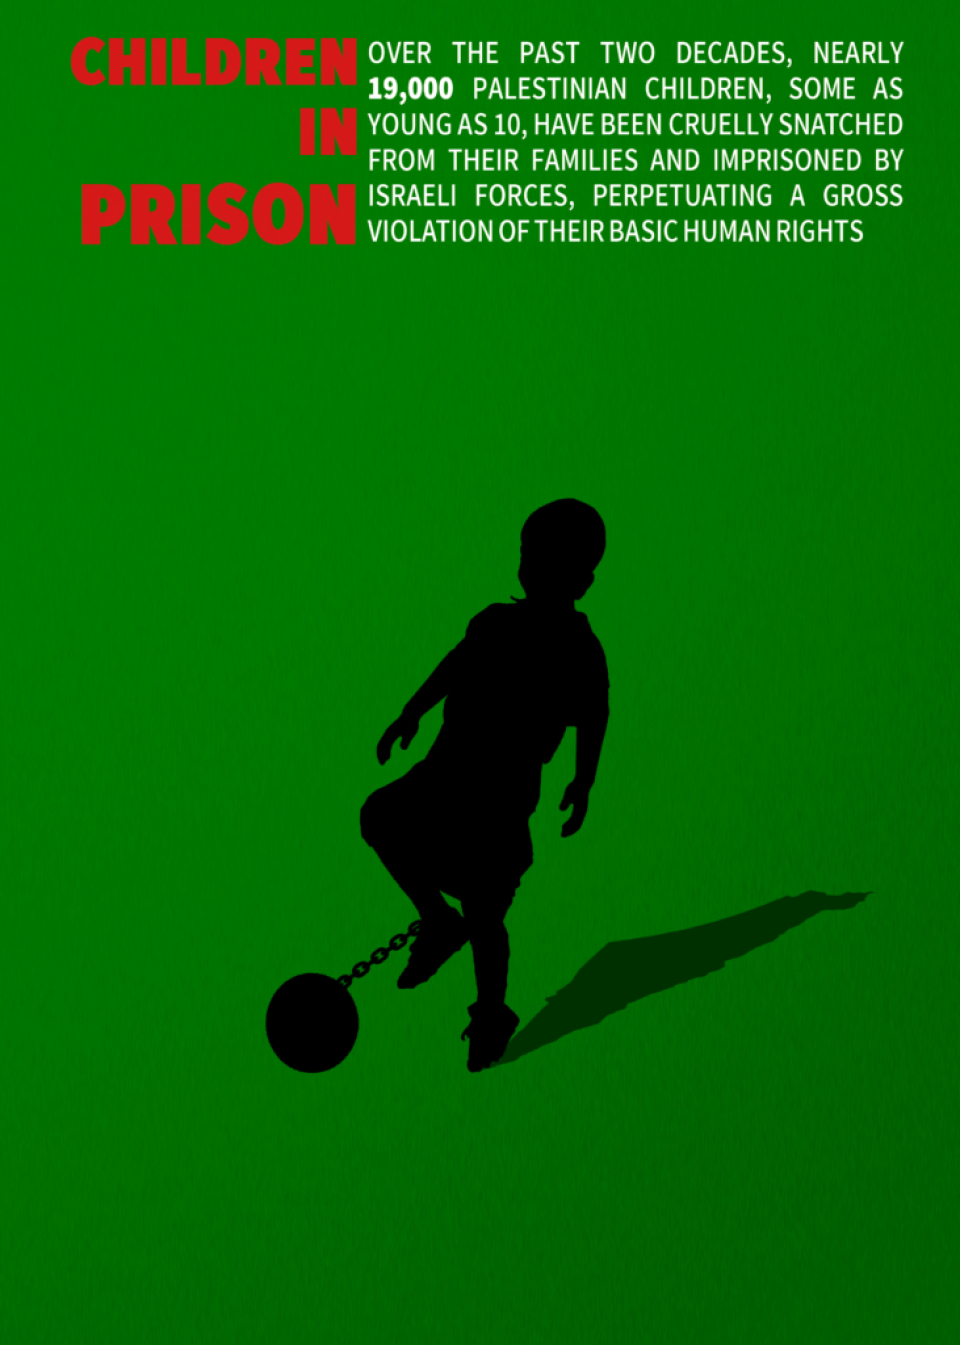 Palestinian Children in Prison